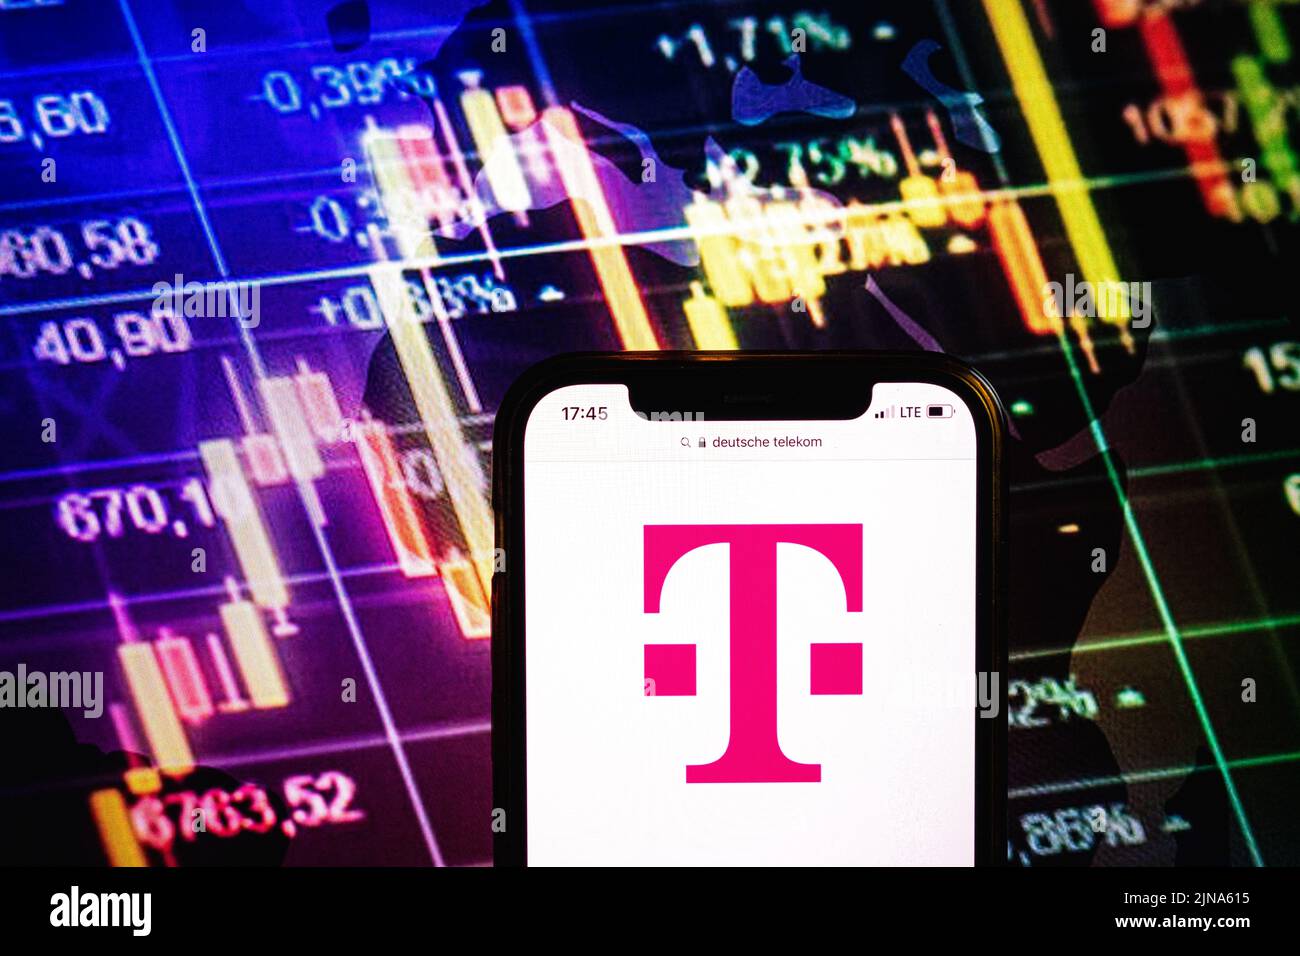 KONSKIE, POLAND - August 09, 2022: Smartphone displaying logo of Deutsche Telekom company on stock exchange diagram background Stock Photo